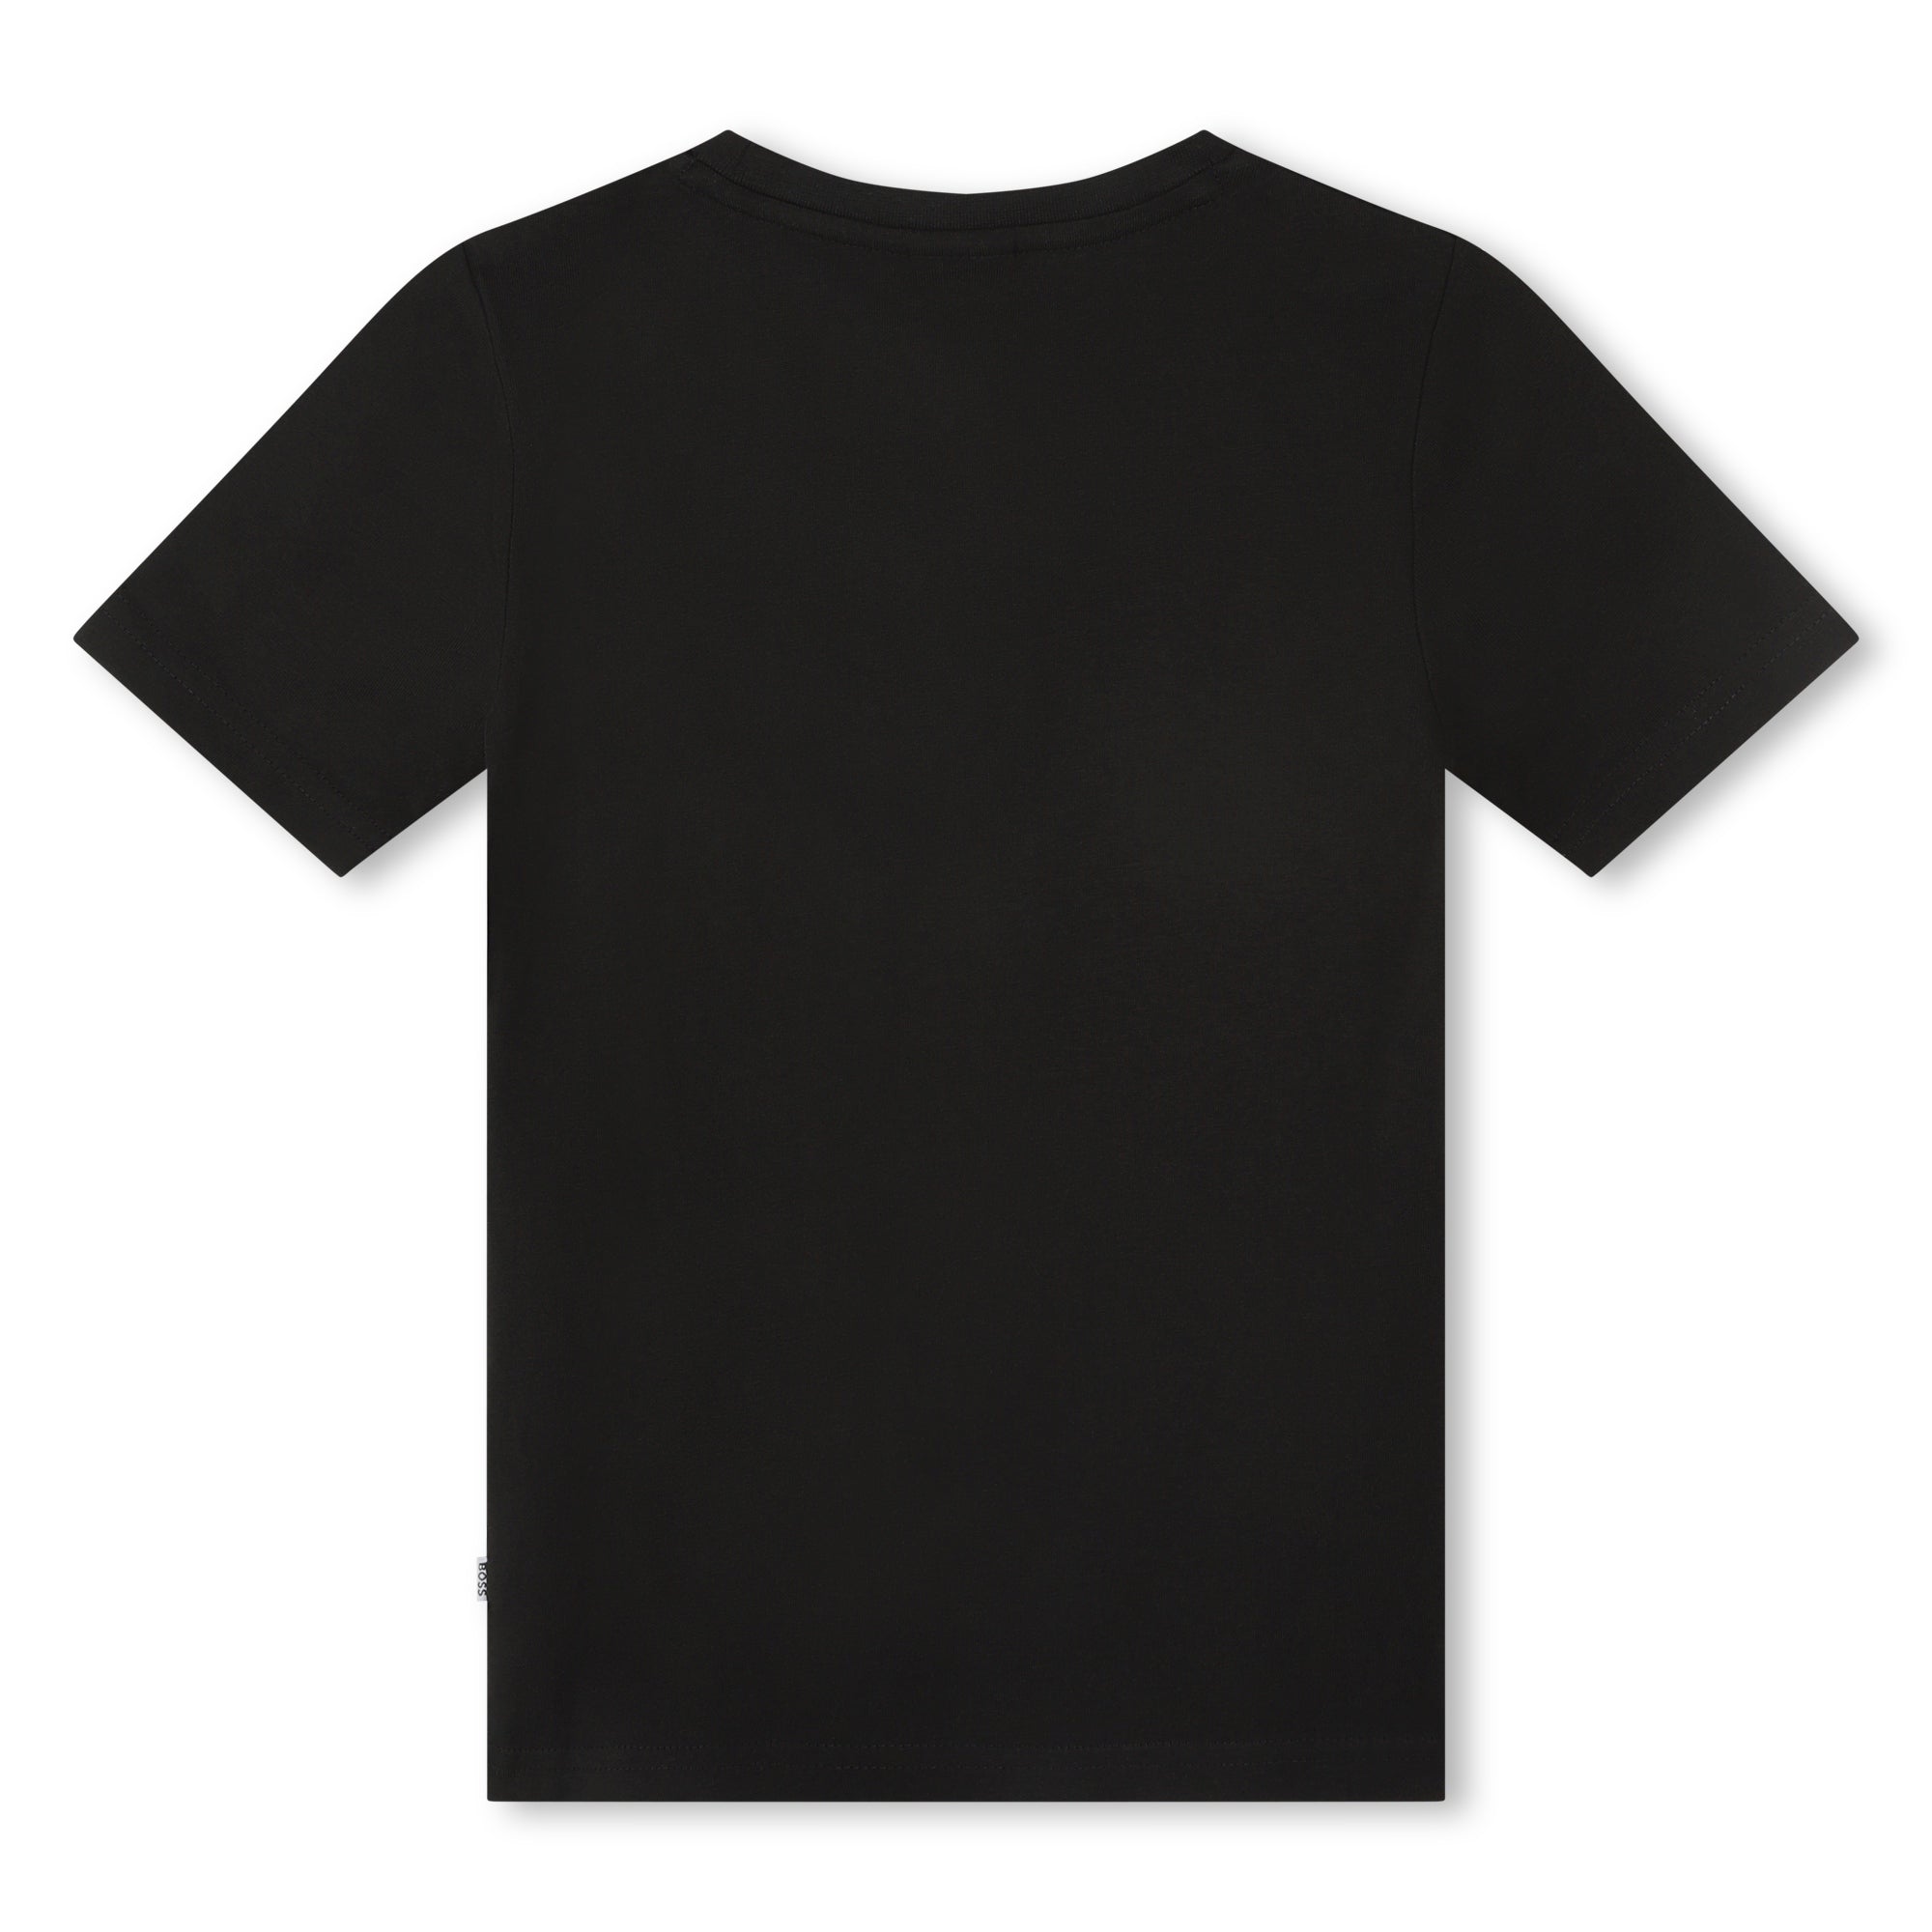 Tee-shirt 14A Black 100% Cotton - Trimming: 96% Cotton, 4% Elastane